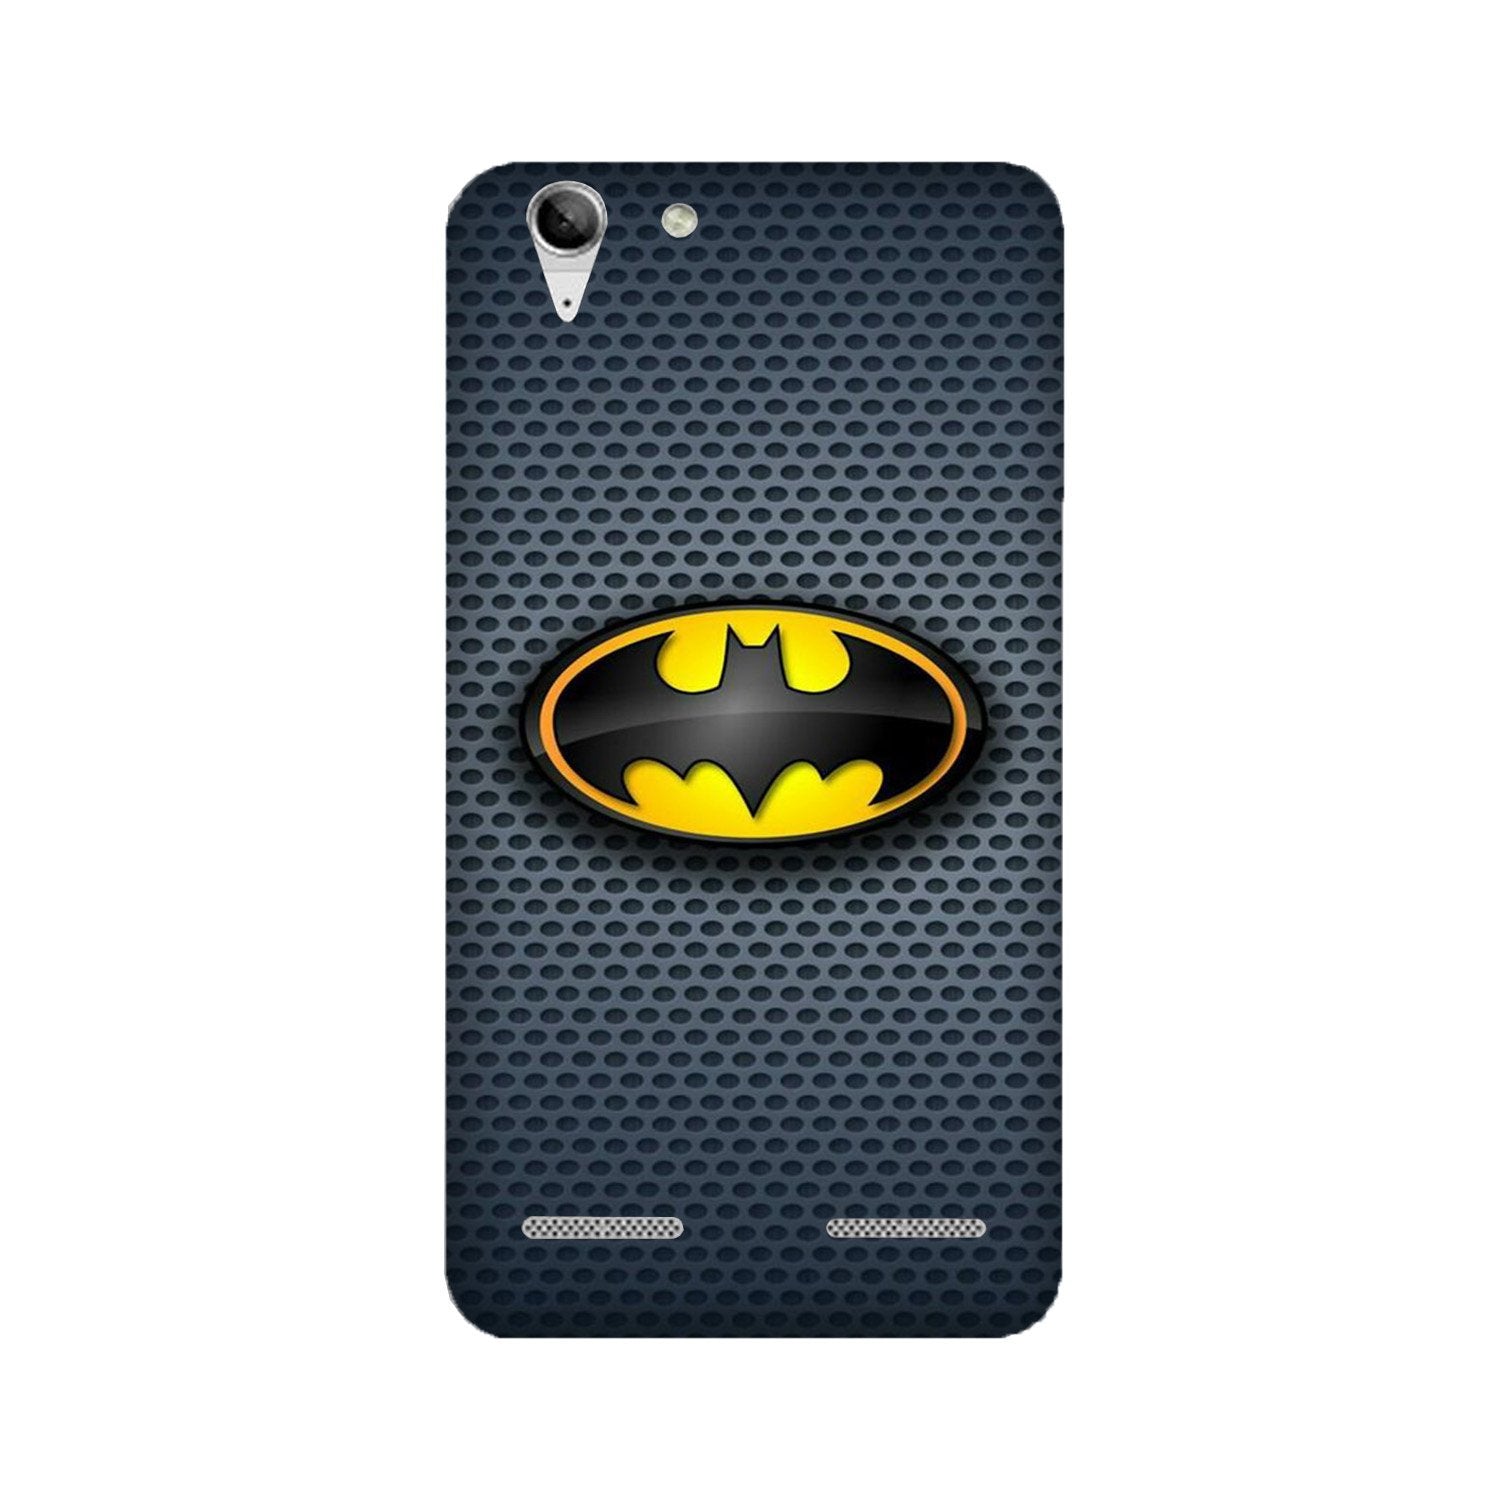 Batman Case for Lenovo K5 / K5 Plus (Design No. 244)